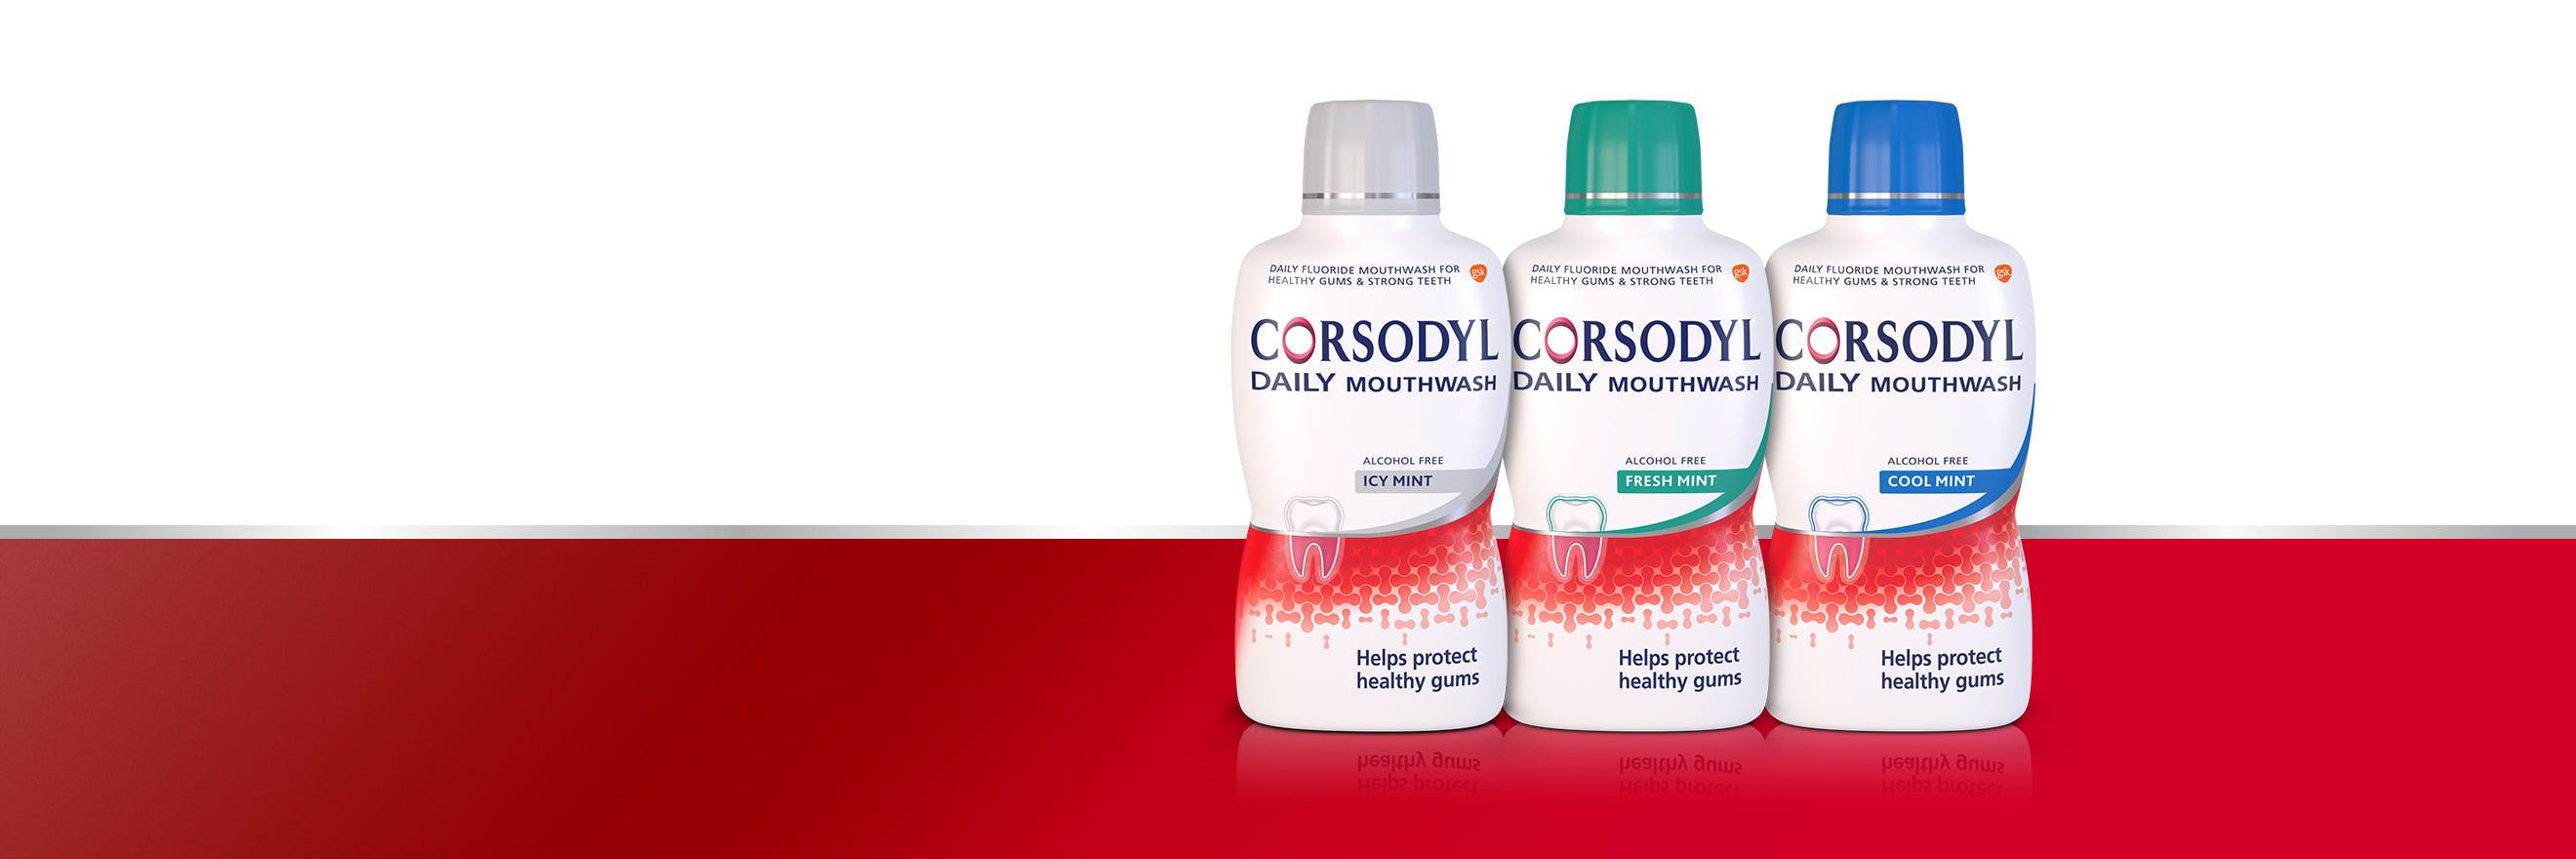 Corsodyl Mouthwash range